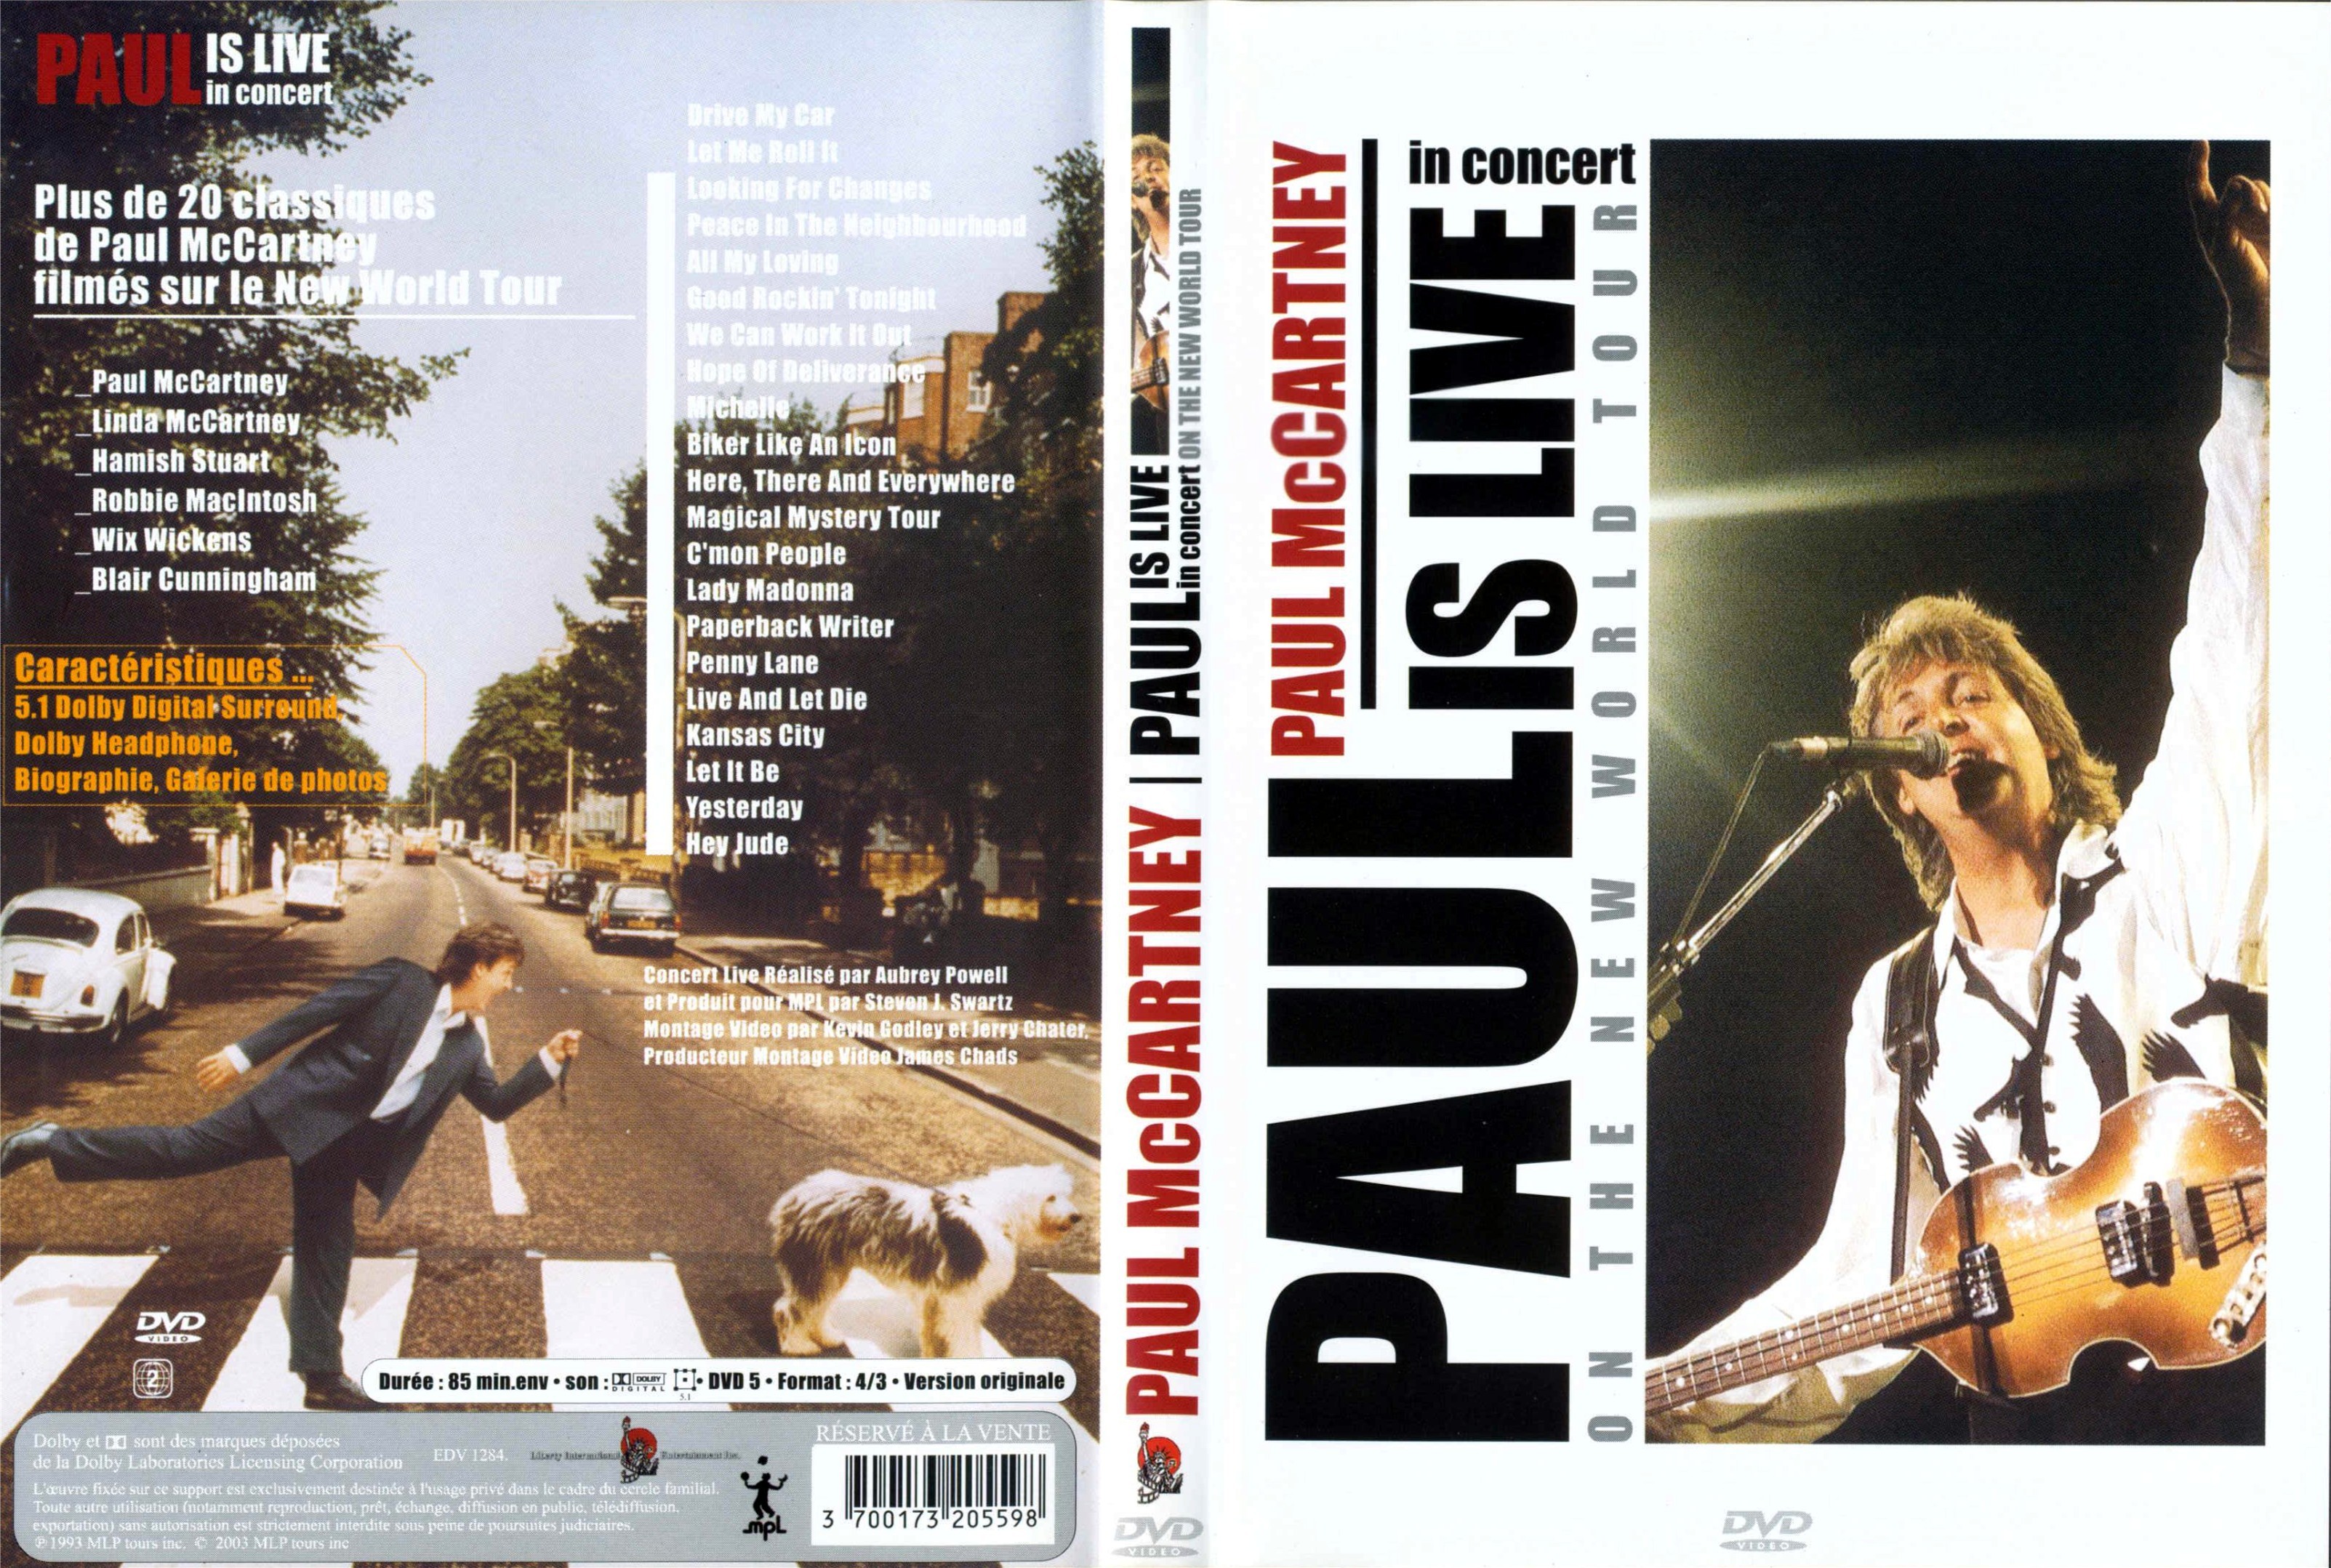 Jaquette DVD Paul McCartney is live in concert